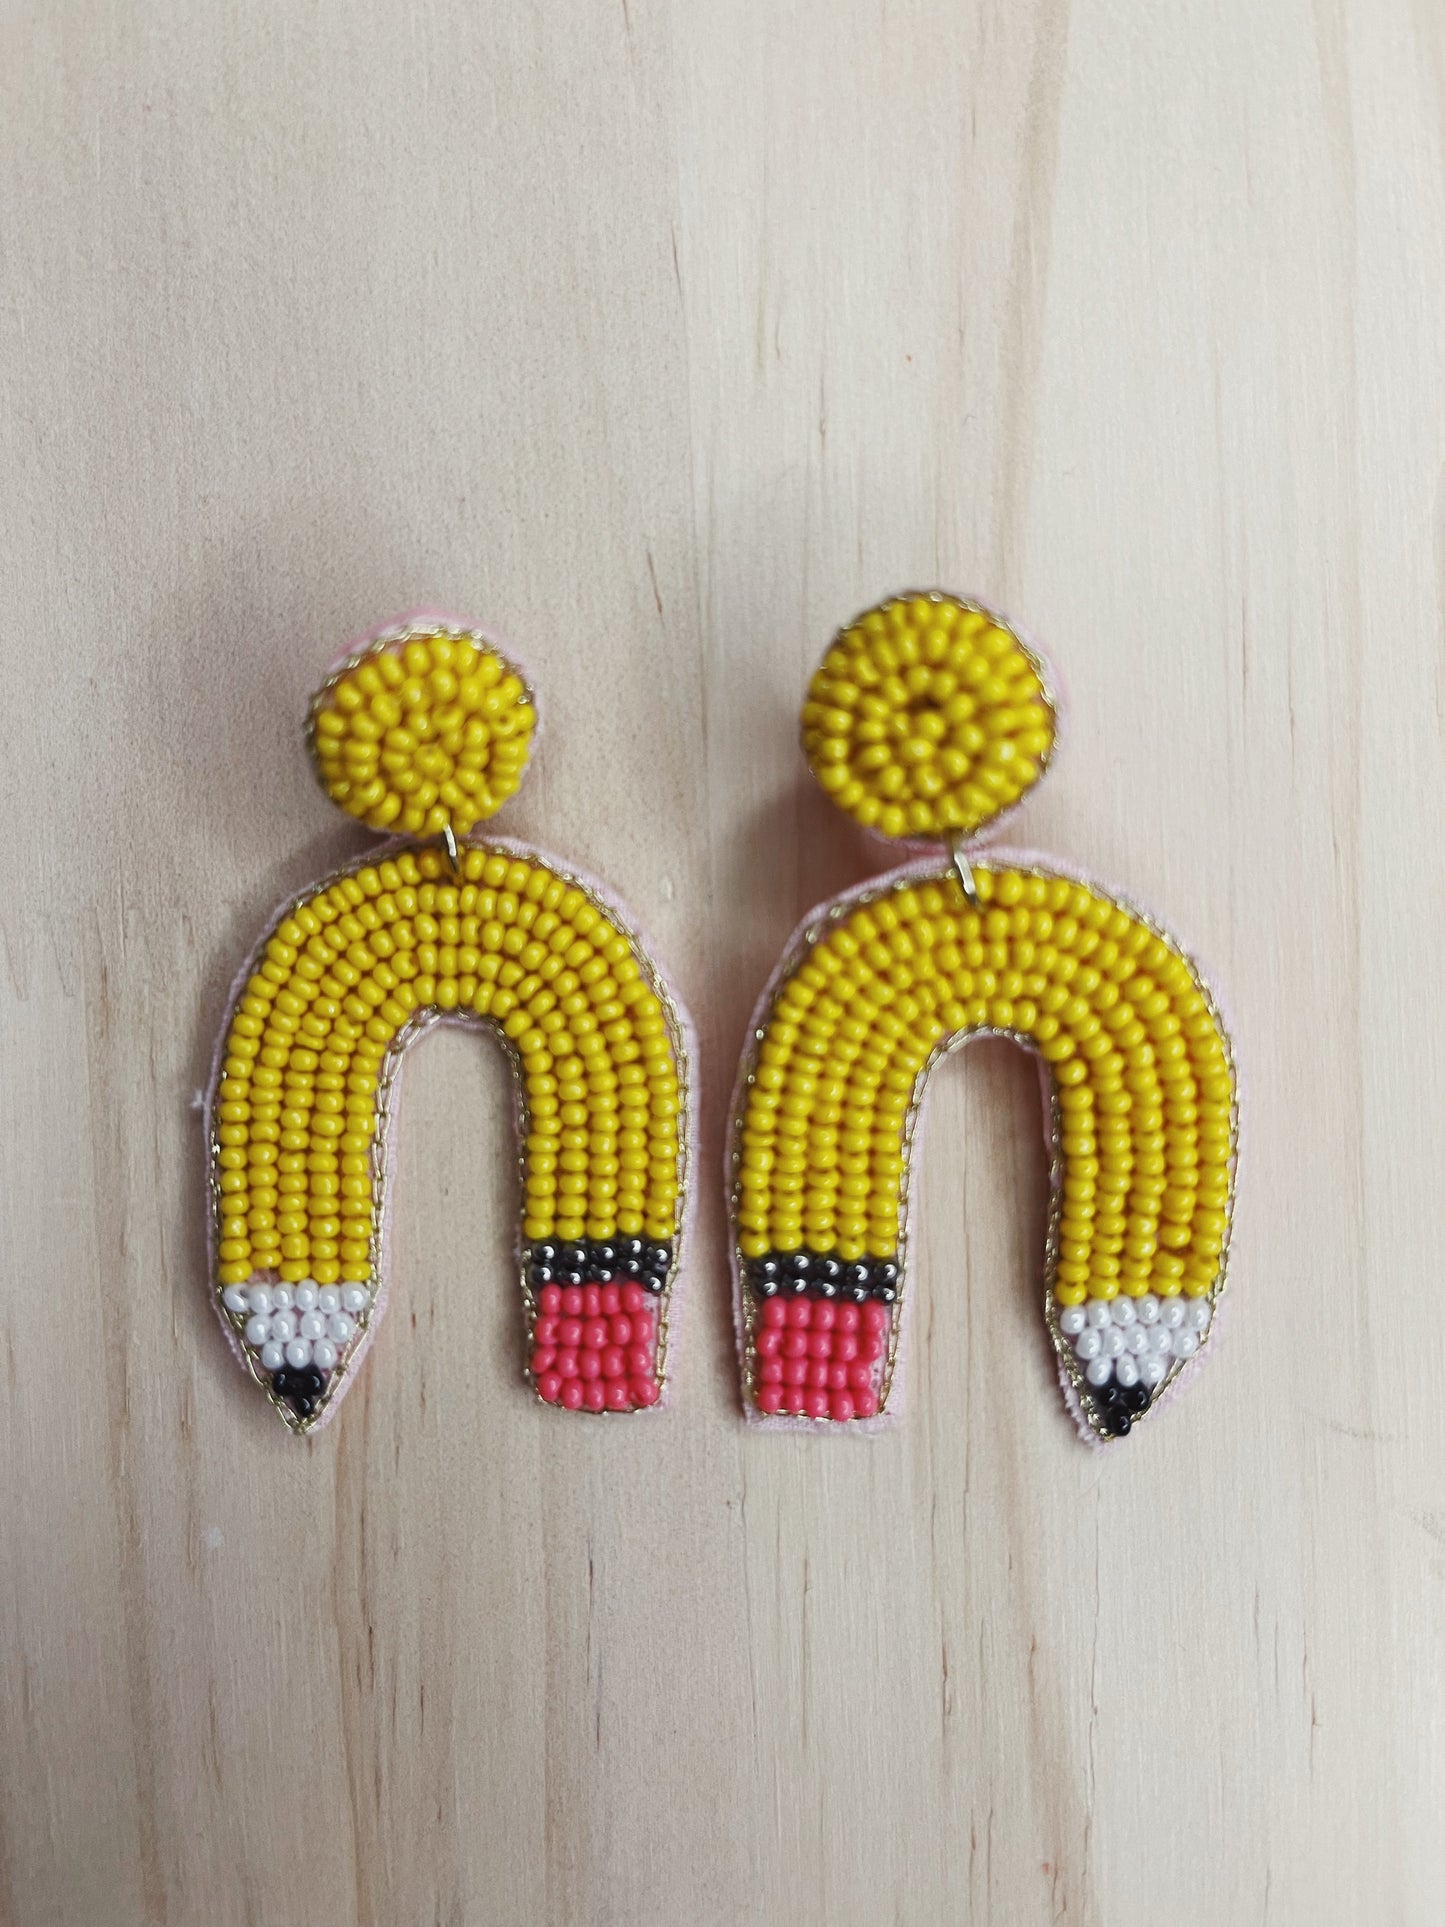 Pencil Arch Seed Bead Earrings